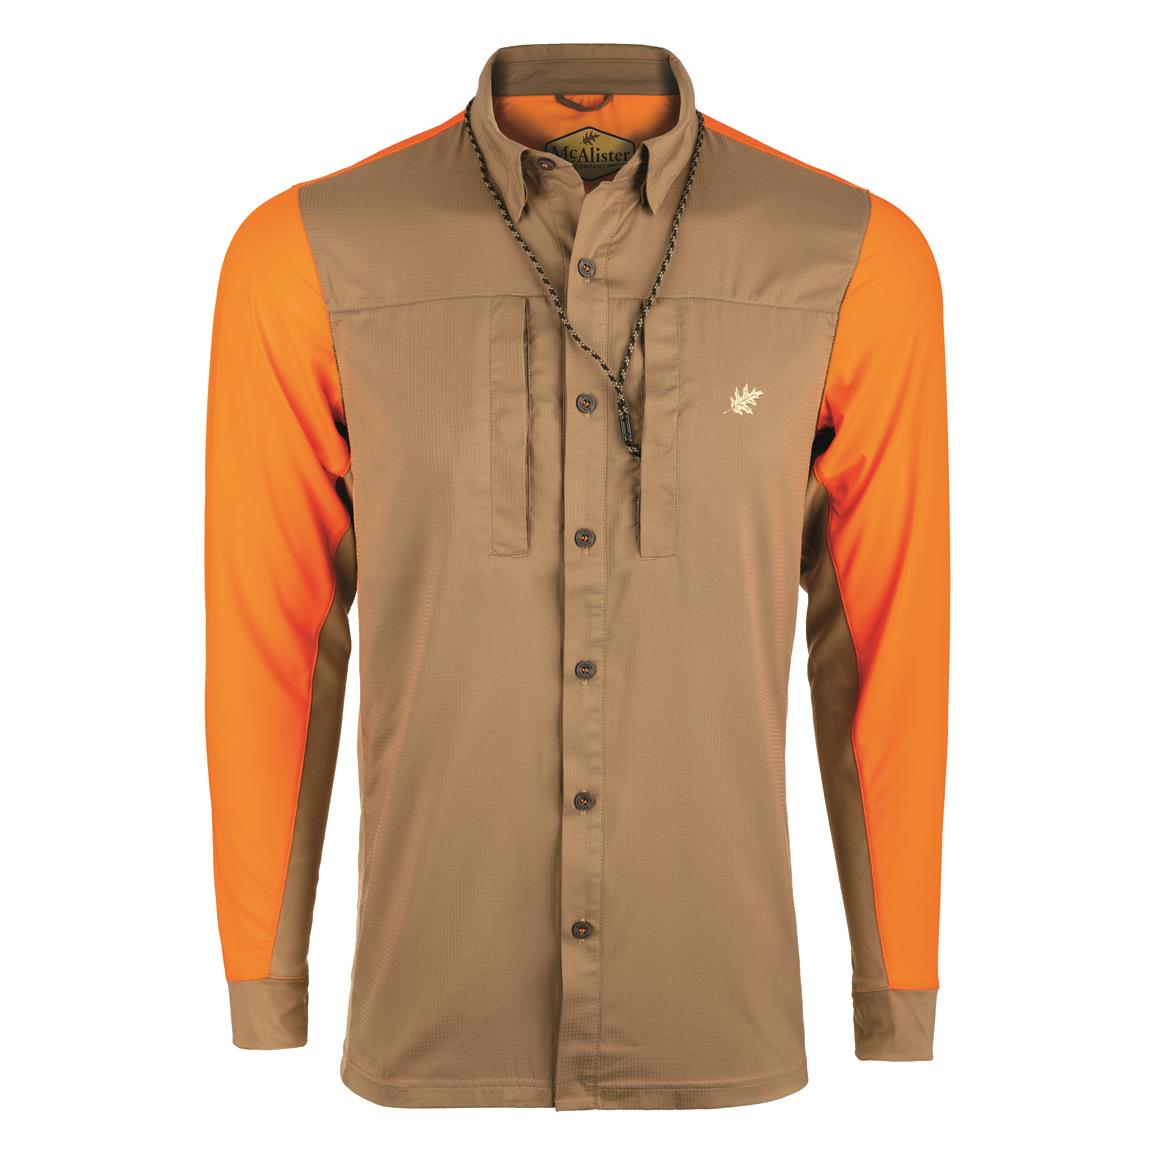 Drake Men's EST Performance Hybrid Upland Shirt, Blaze Orange/khaki